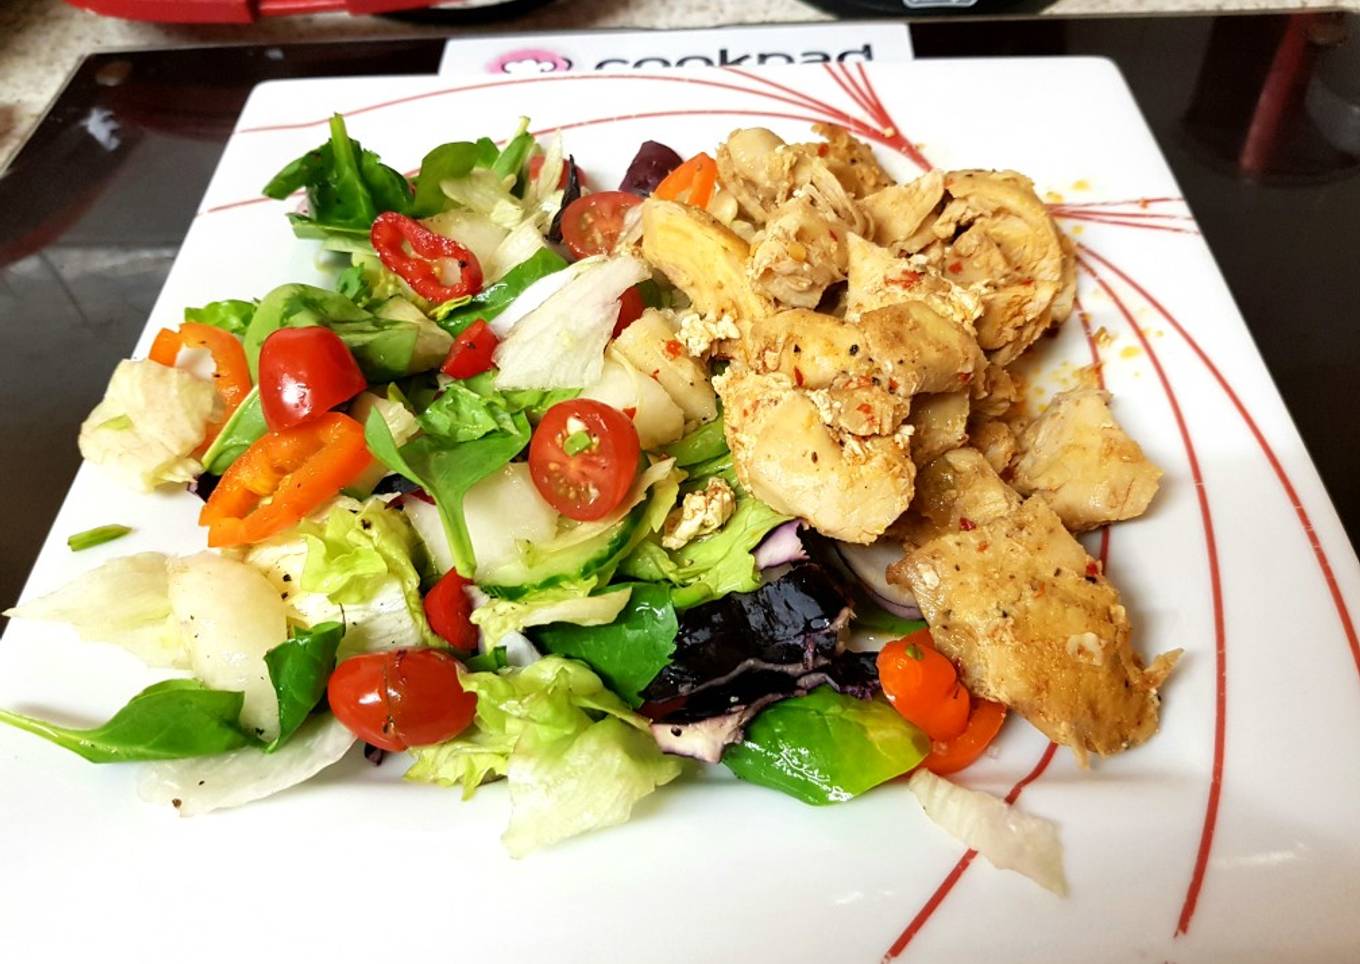 My Peri peri maranated Chicken breast with Salad. 😀